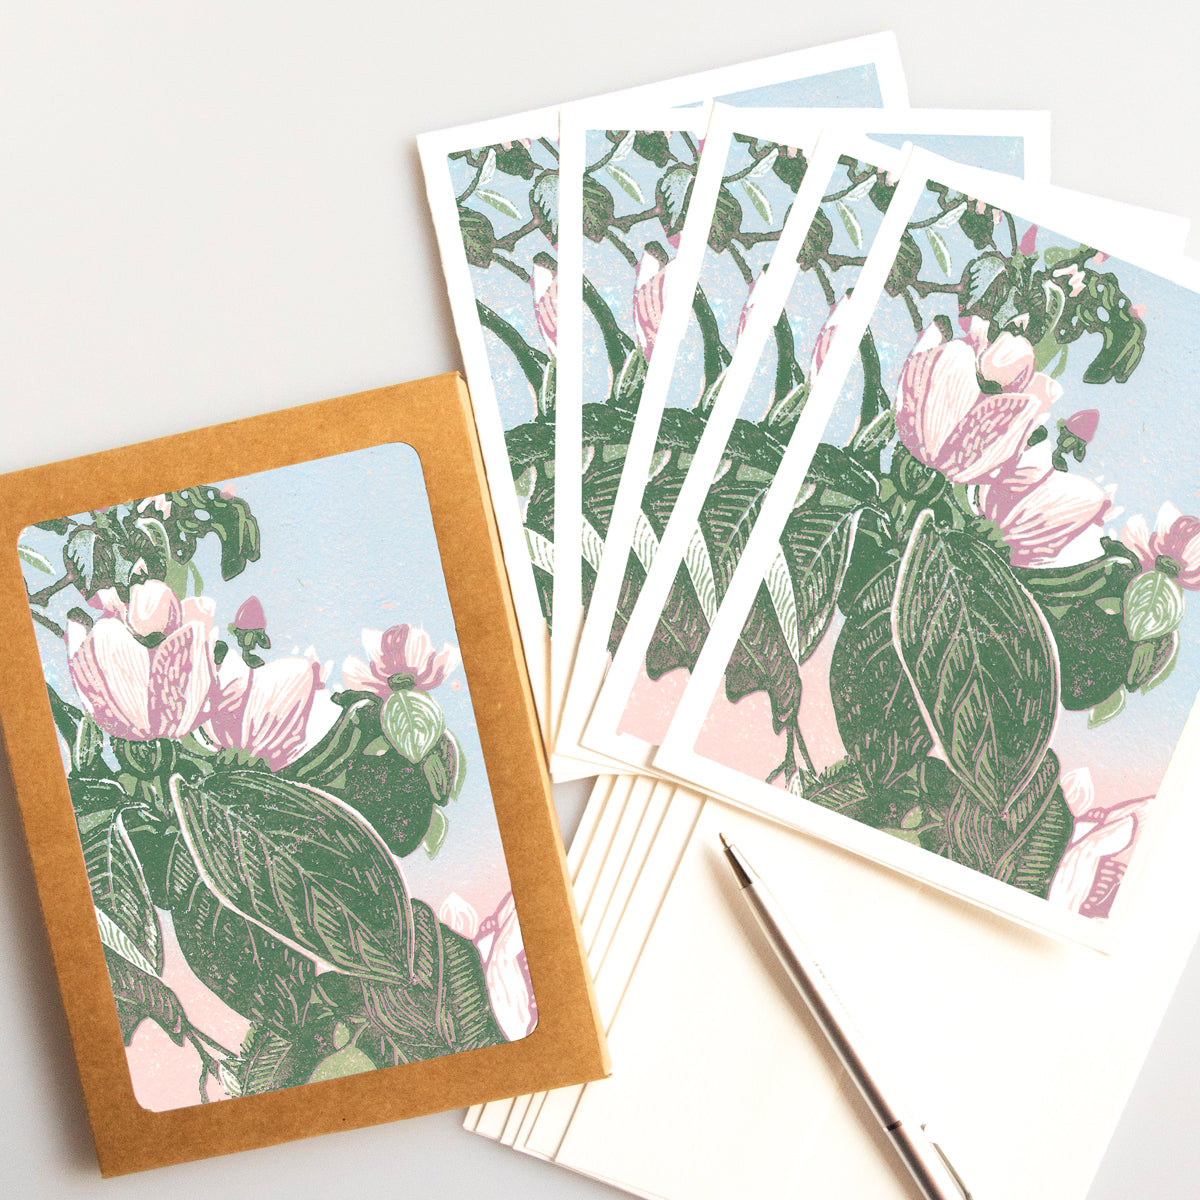 A casually elegant card set featuring floral art by Natalia Wohletz titled En el Jardin.